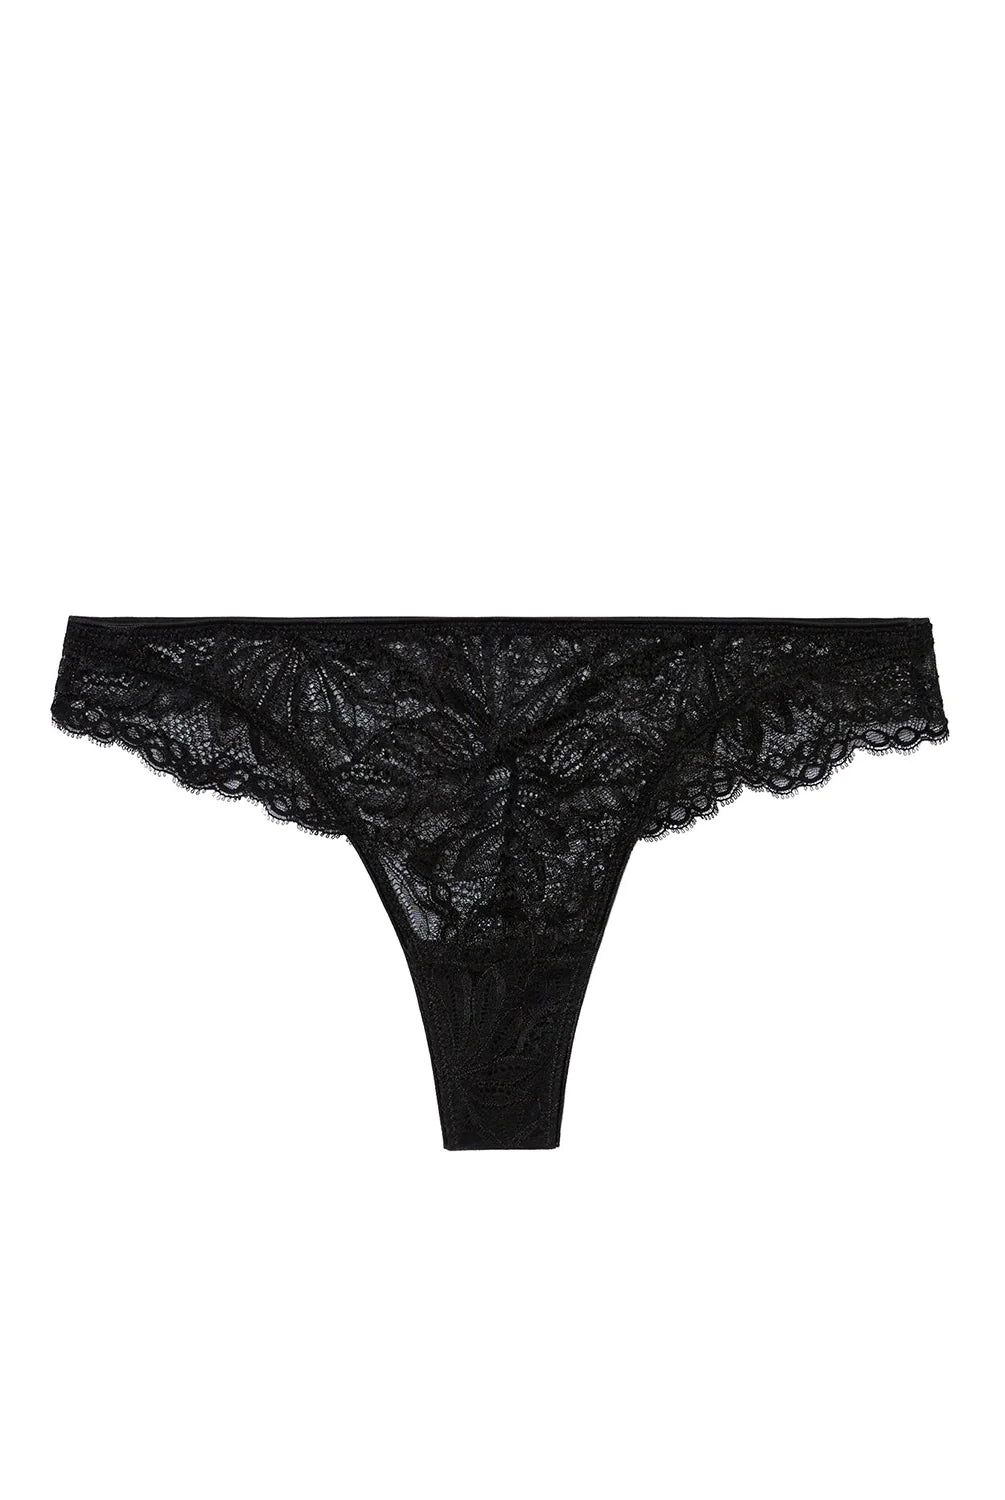 Exotica Tanga Panty - Black - Flirt! Luxe Lingerie & Sleepwear